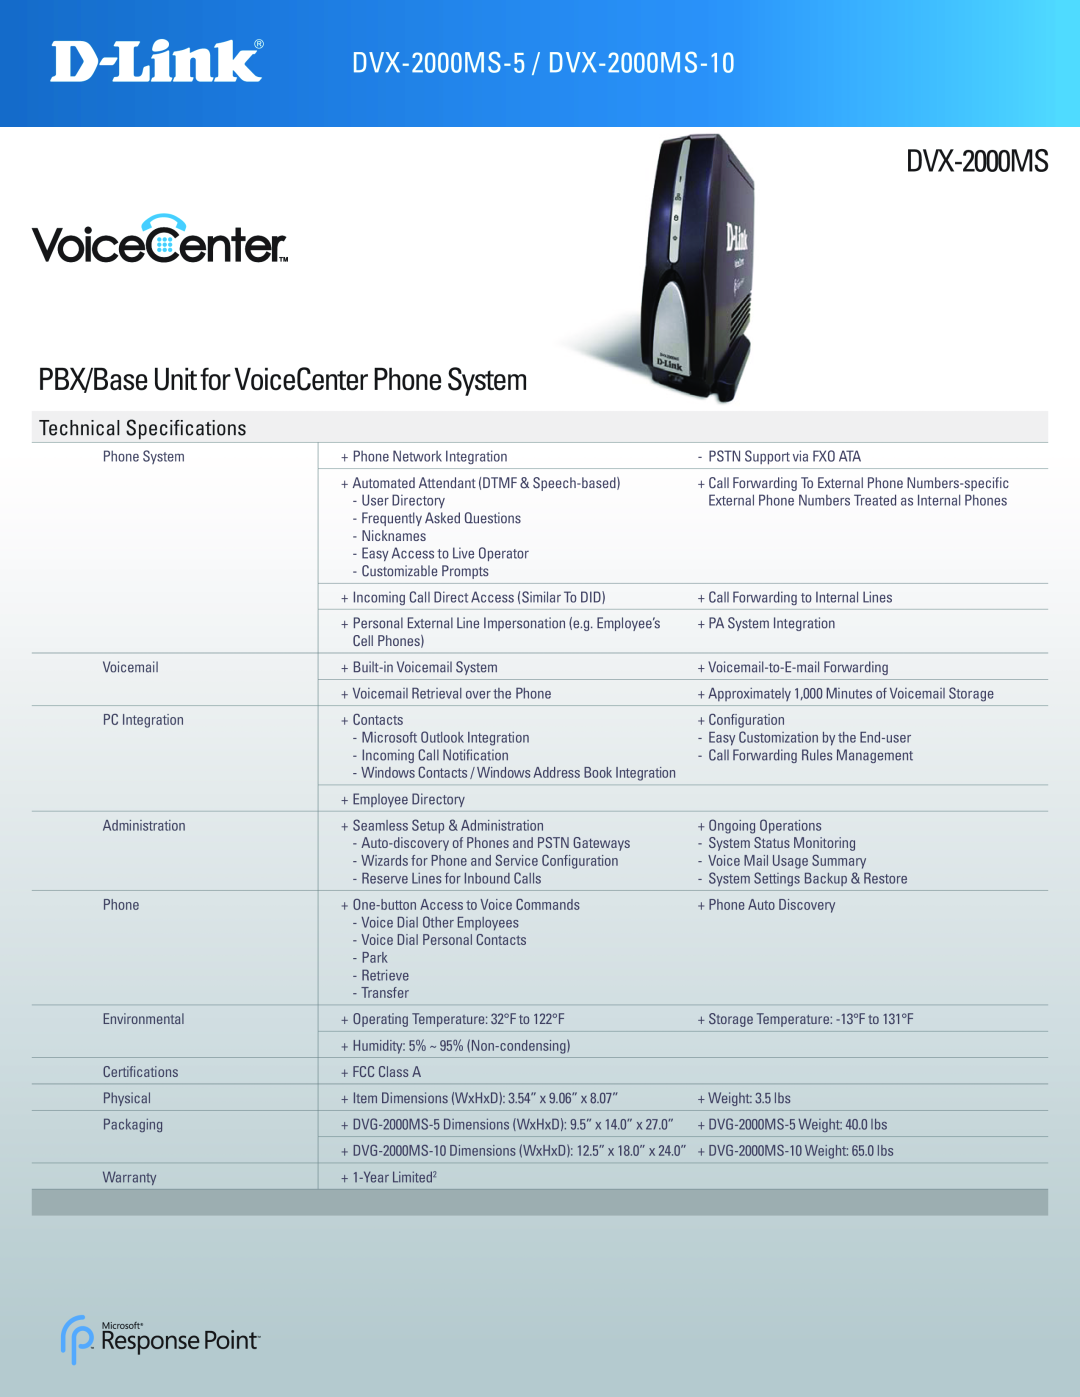 D-Link DVX-2000MS-5, DVX-2000MS-10 manual DVX-2000MS PBX/Base Unit for VoiceCenter Phone System, Technical Specifications 